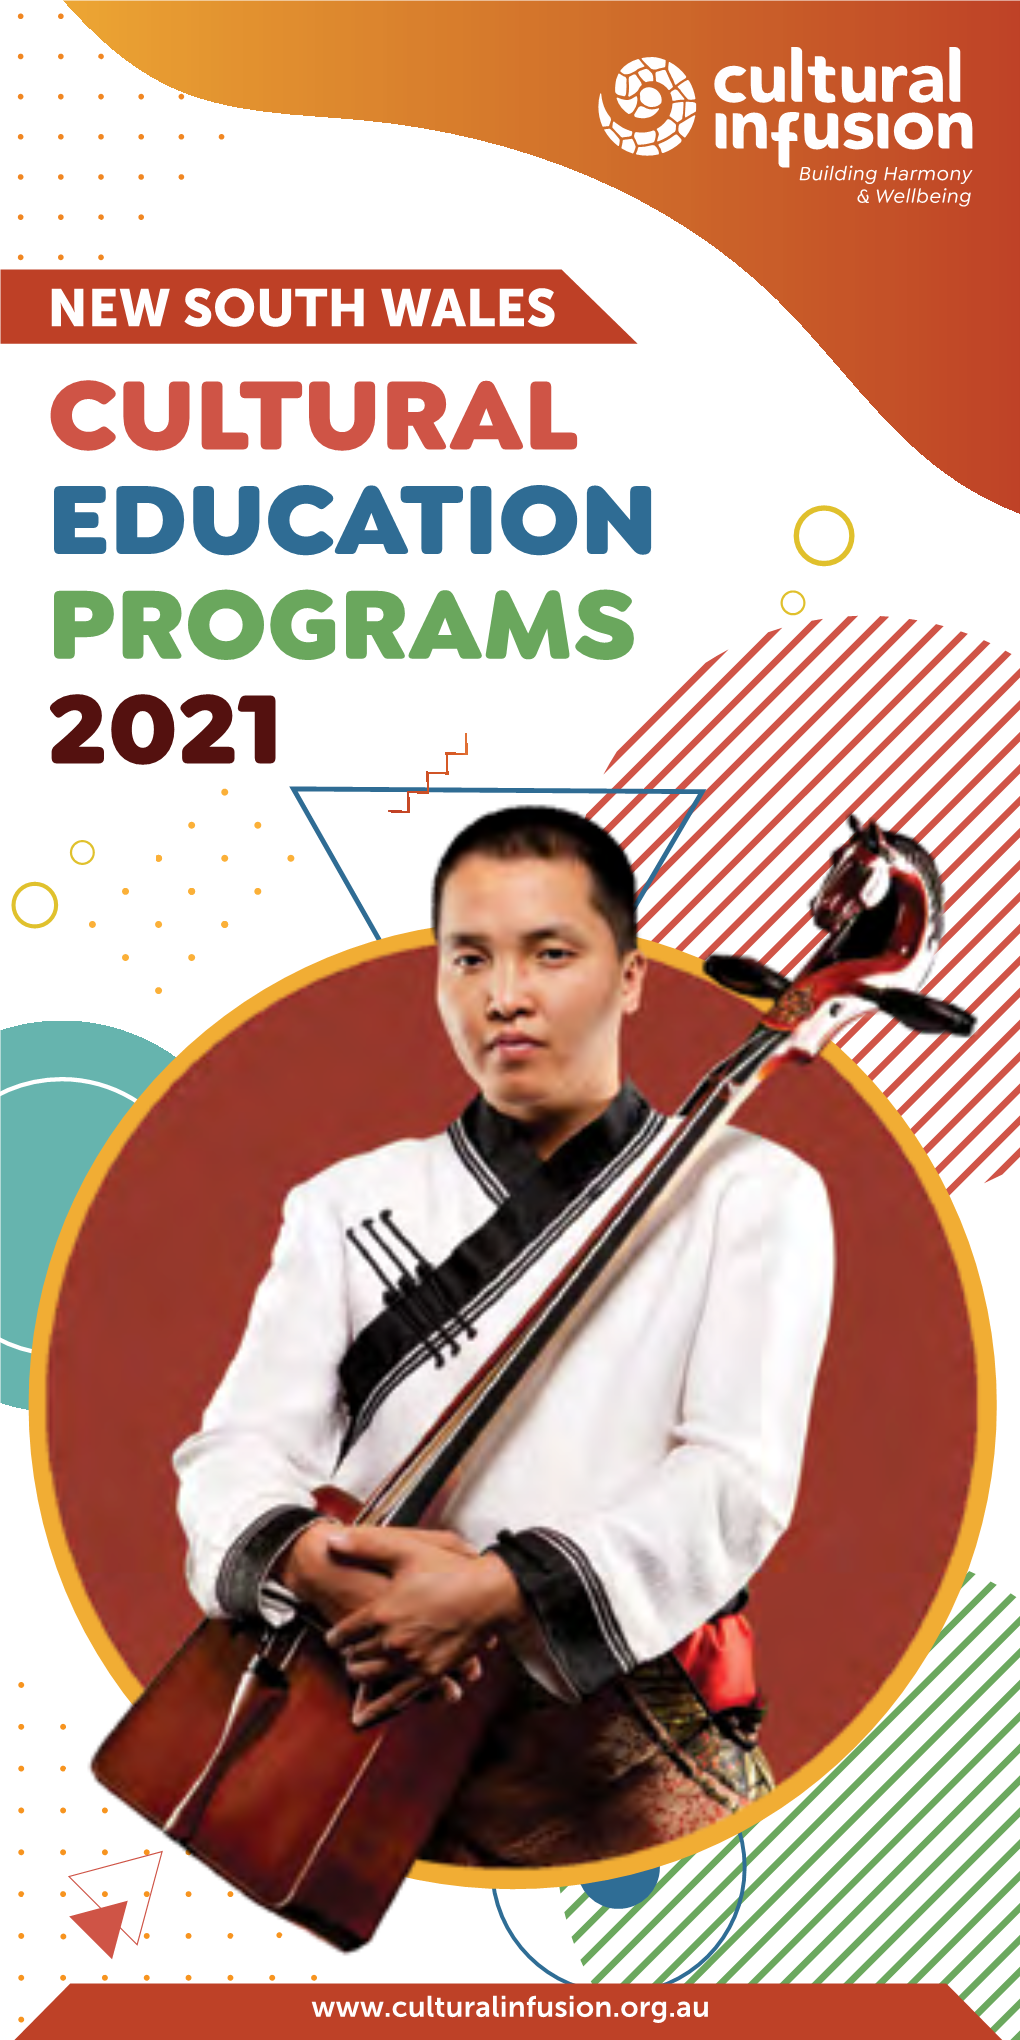 Cultural Education Programs 2021